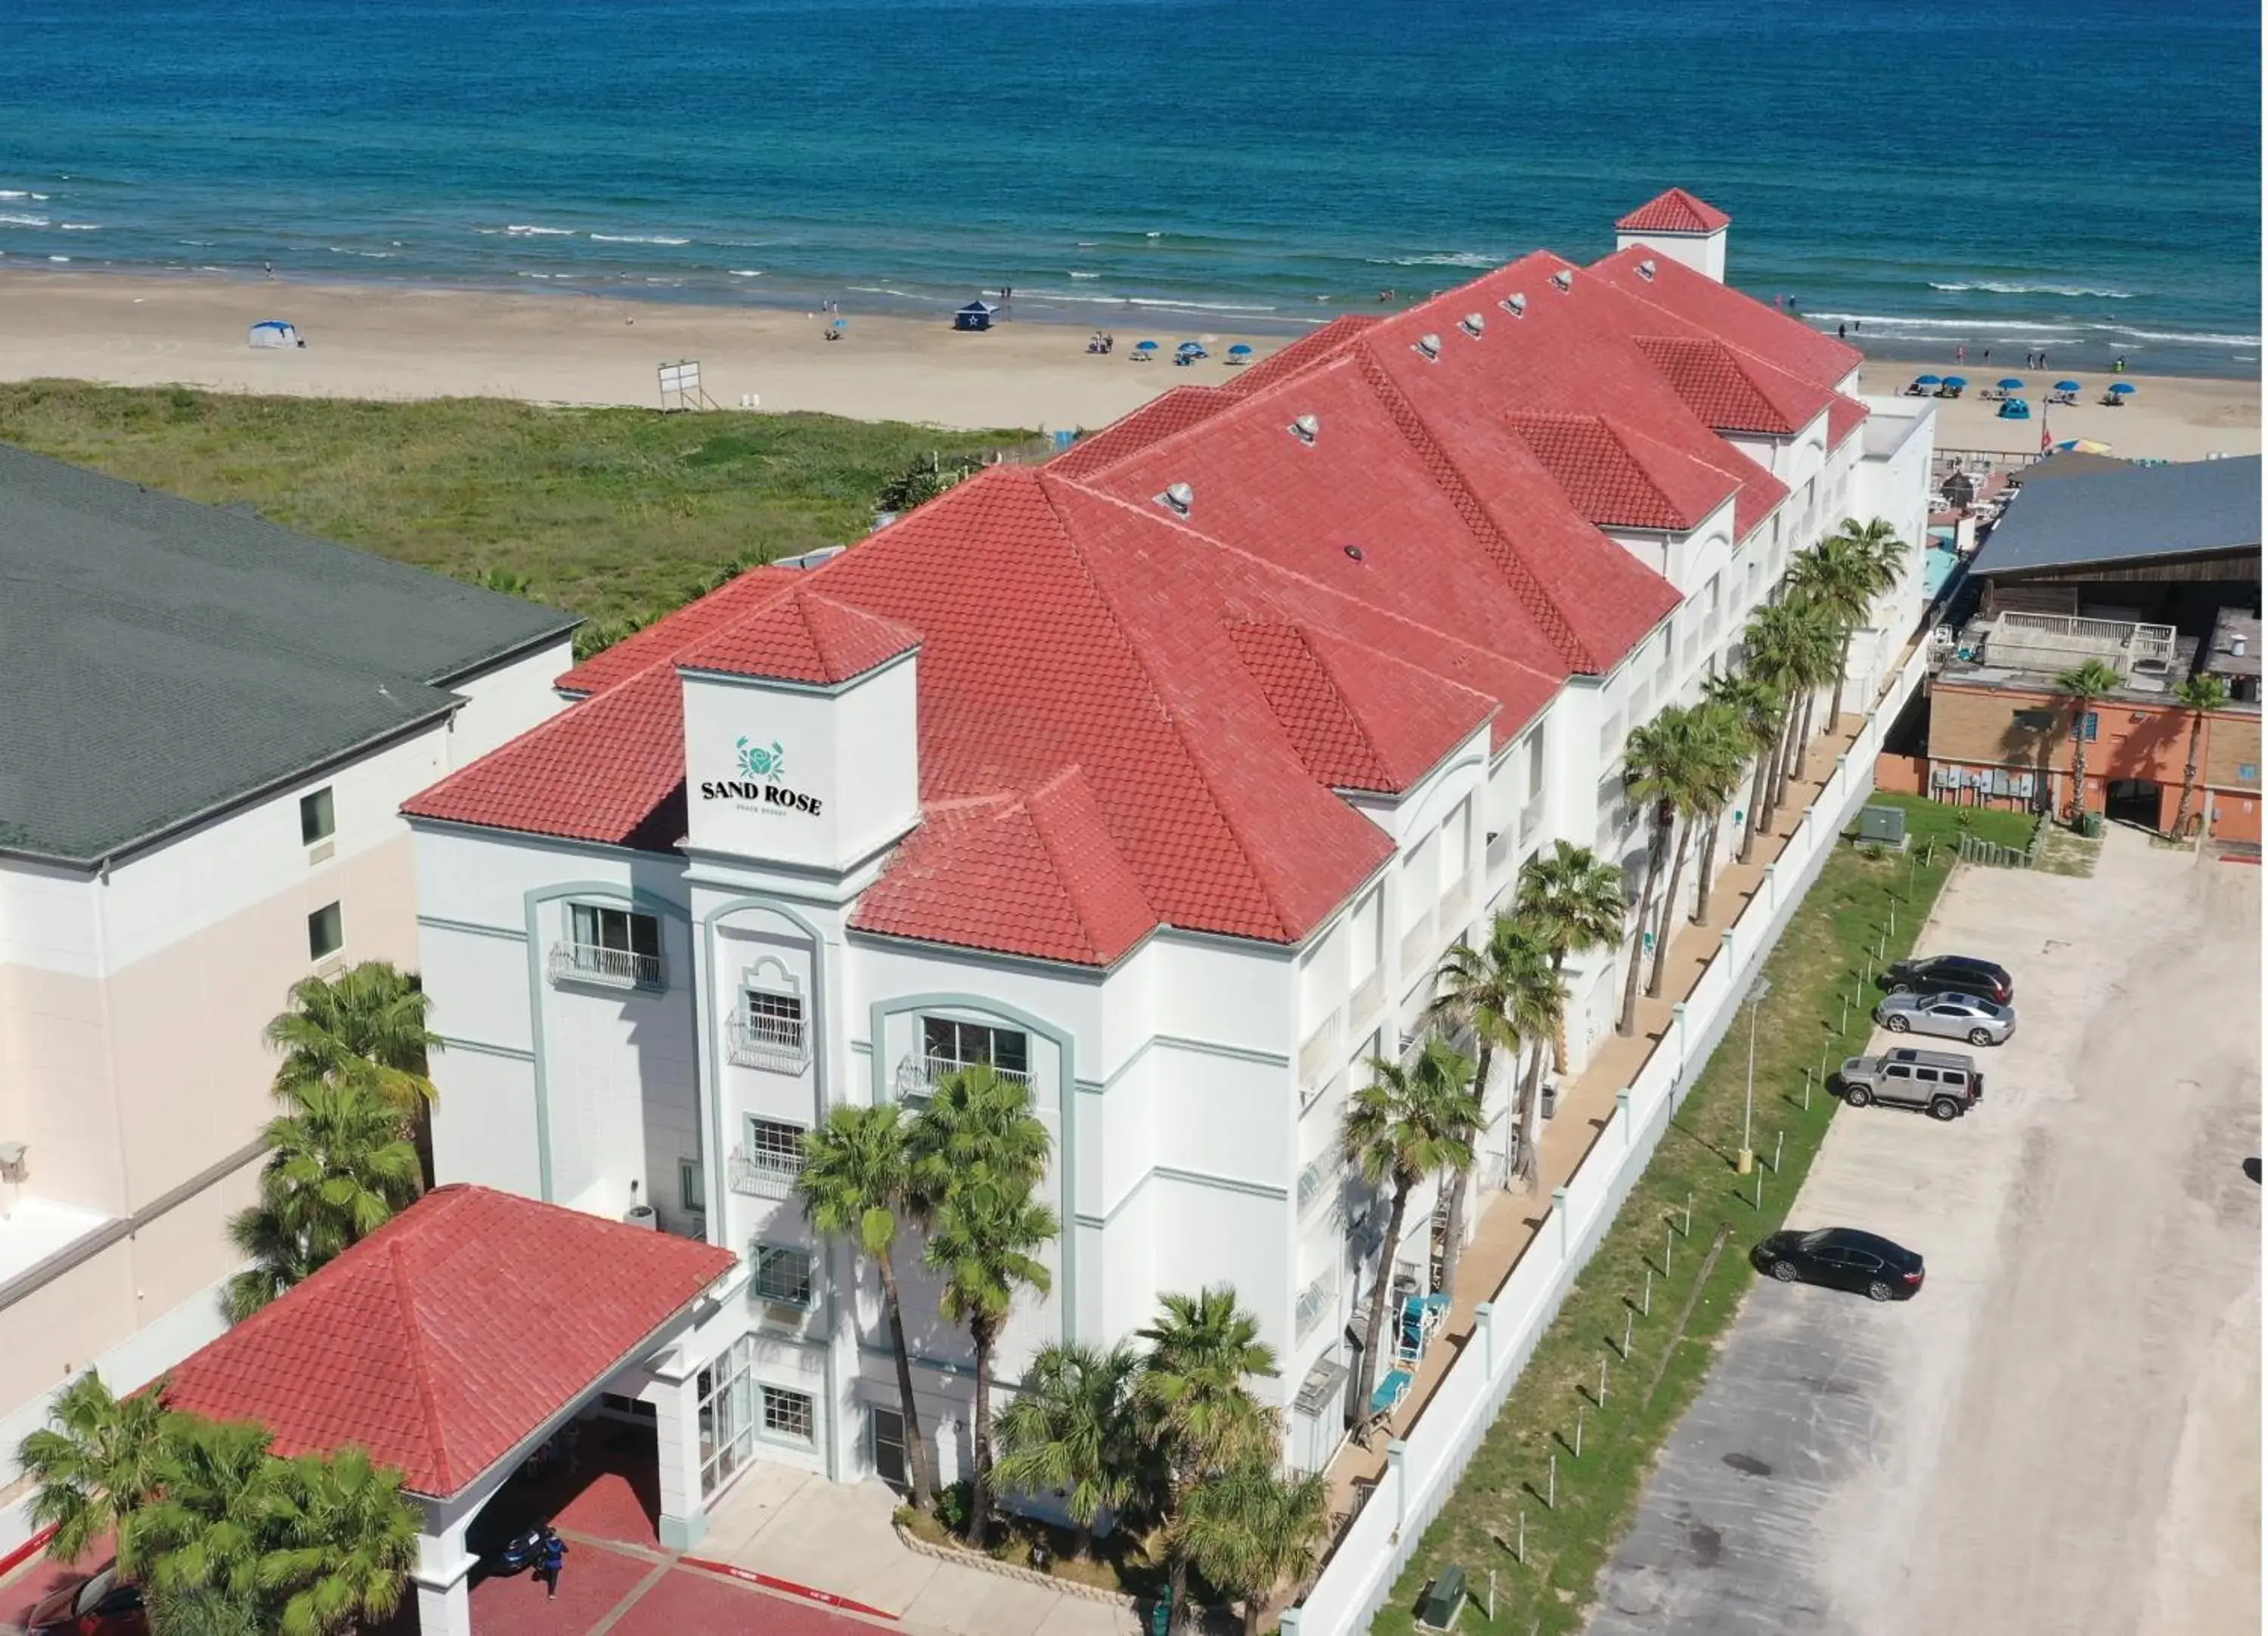 Property building, Bird's-eye View in Sand Rose Beach Resort